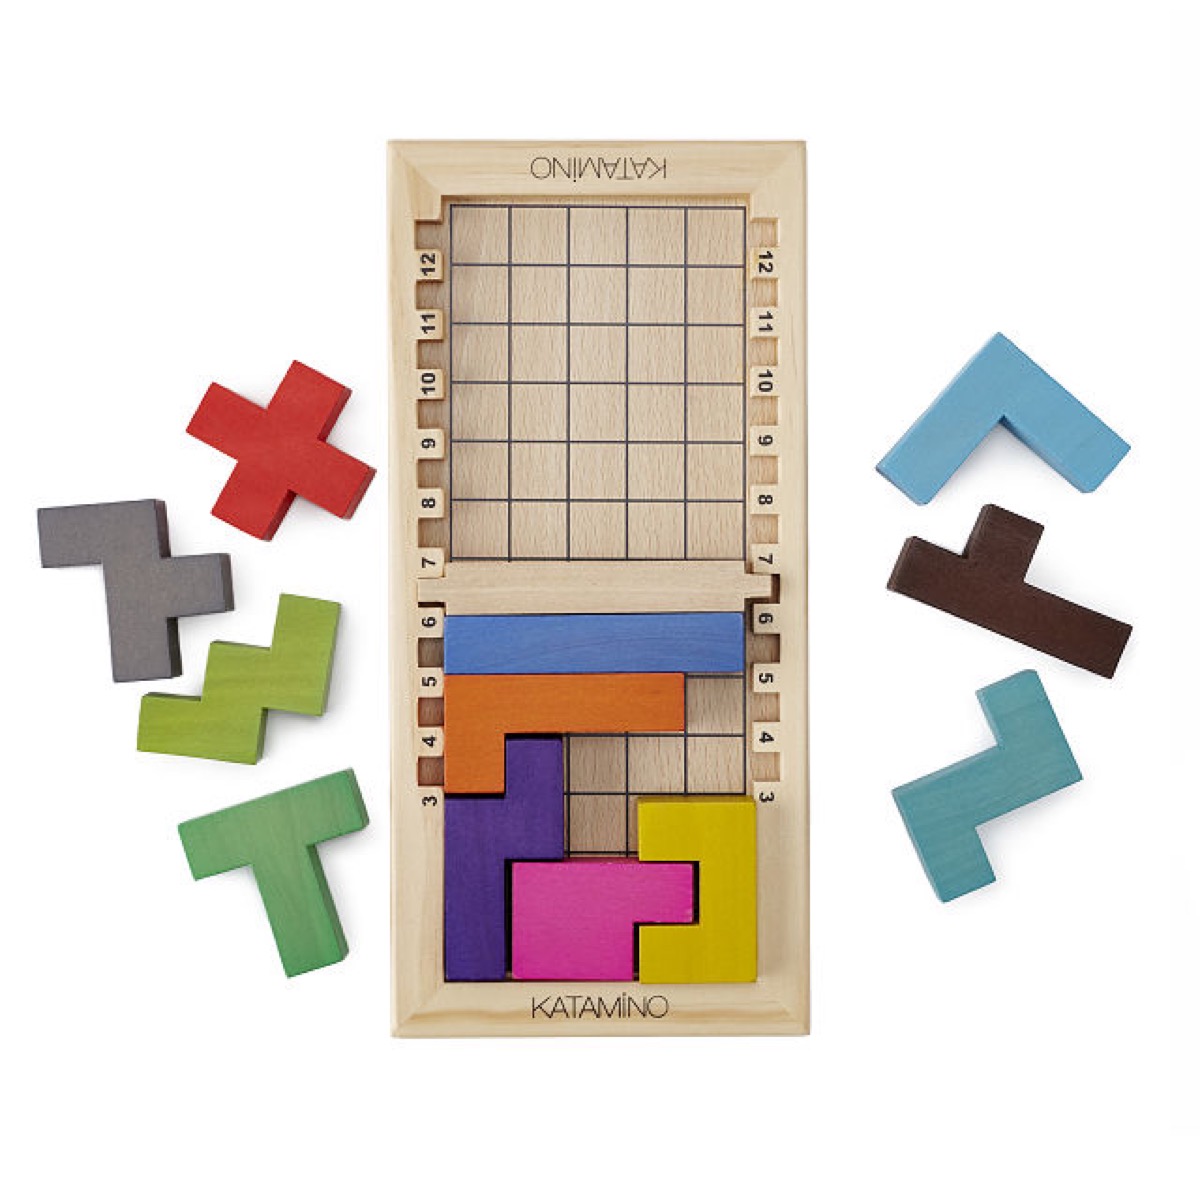 Tetris-like puzzle